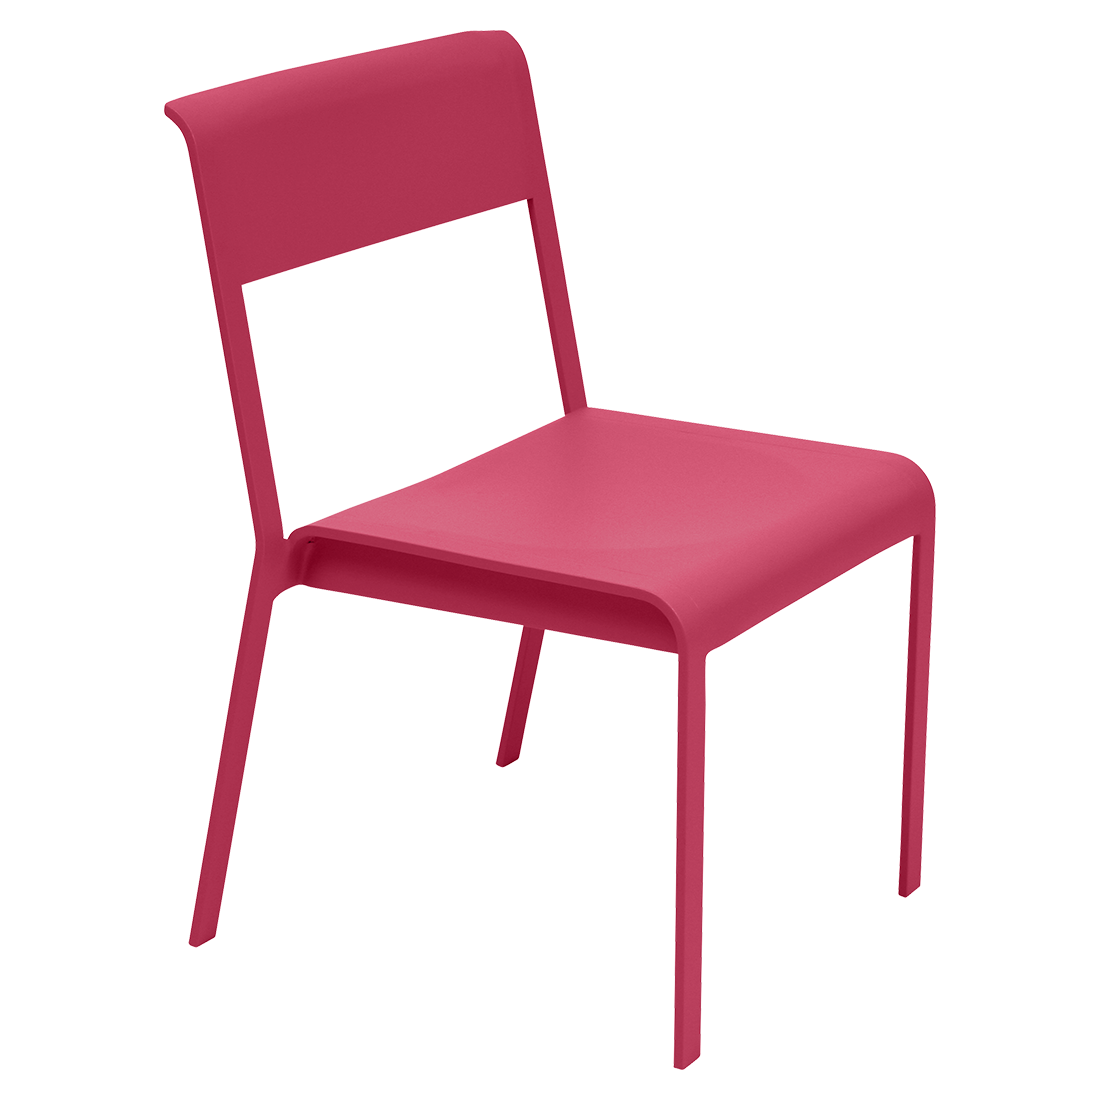 chaise metal, chaise de jardin, chaise metal design, chaise metal rose